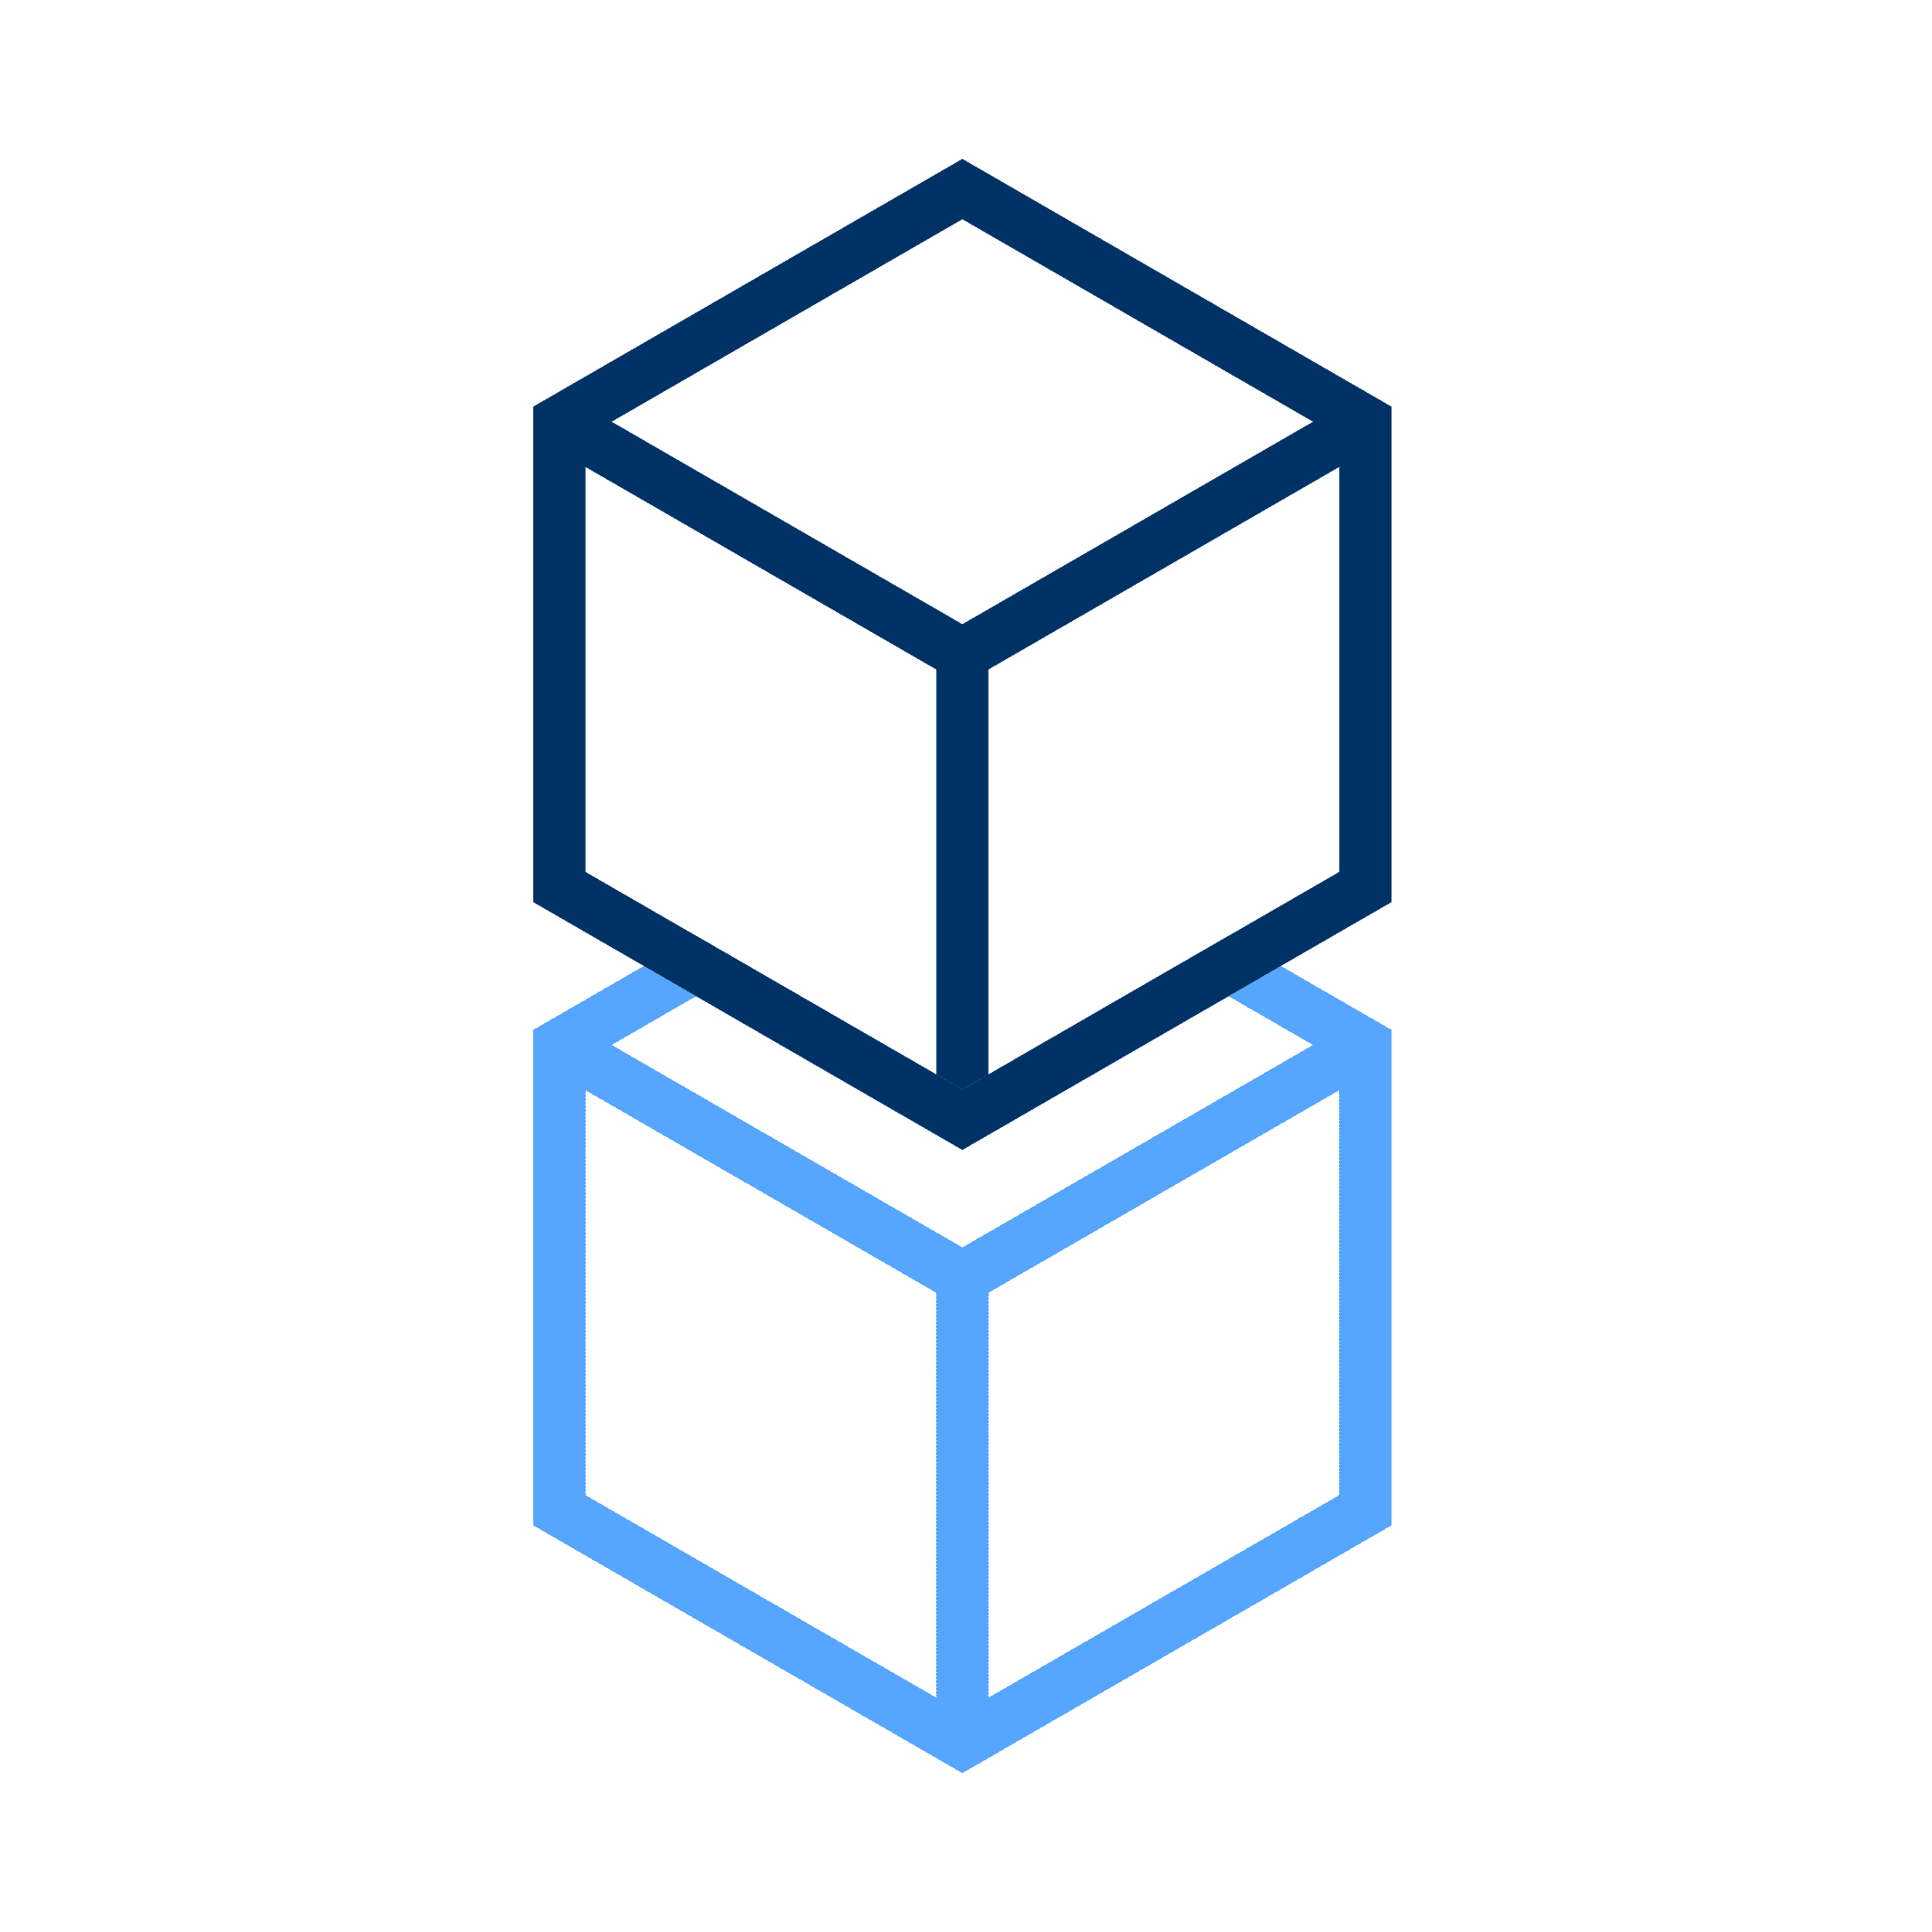 Blockchain icon with blue blocks